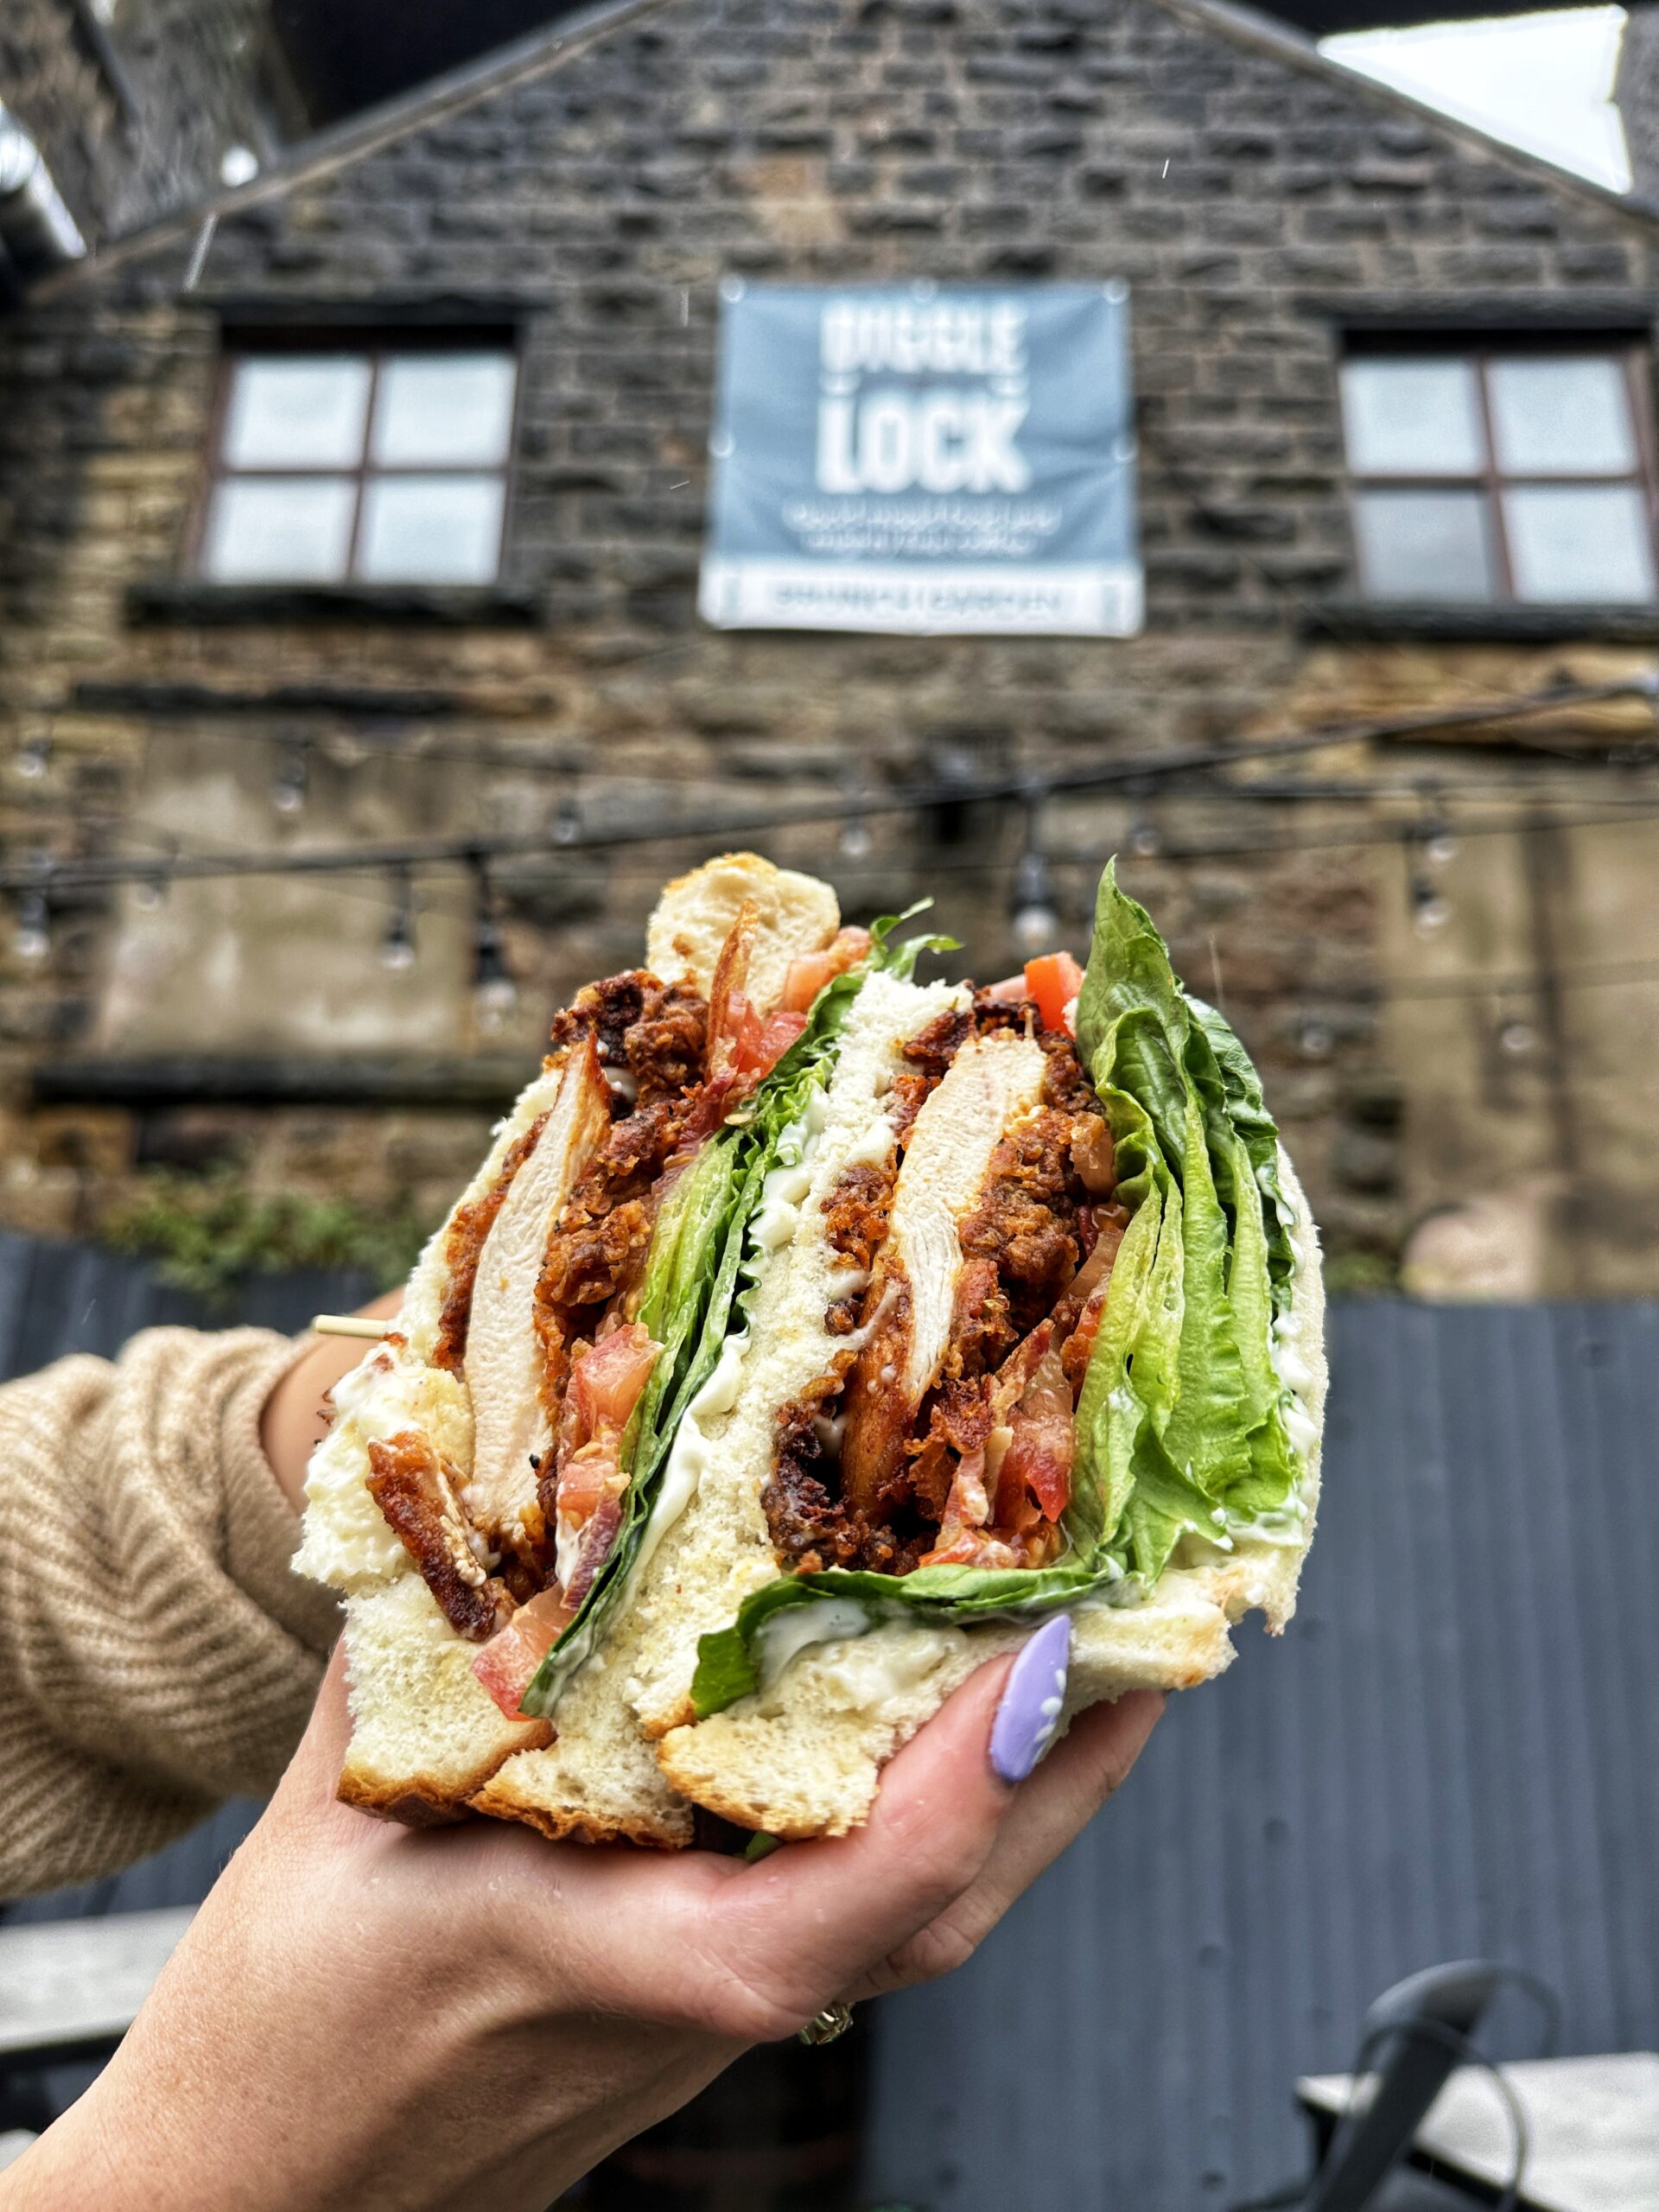 The DLFC club sandwich at Diggle Lock in Saddleworth